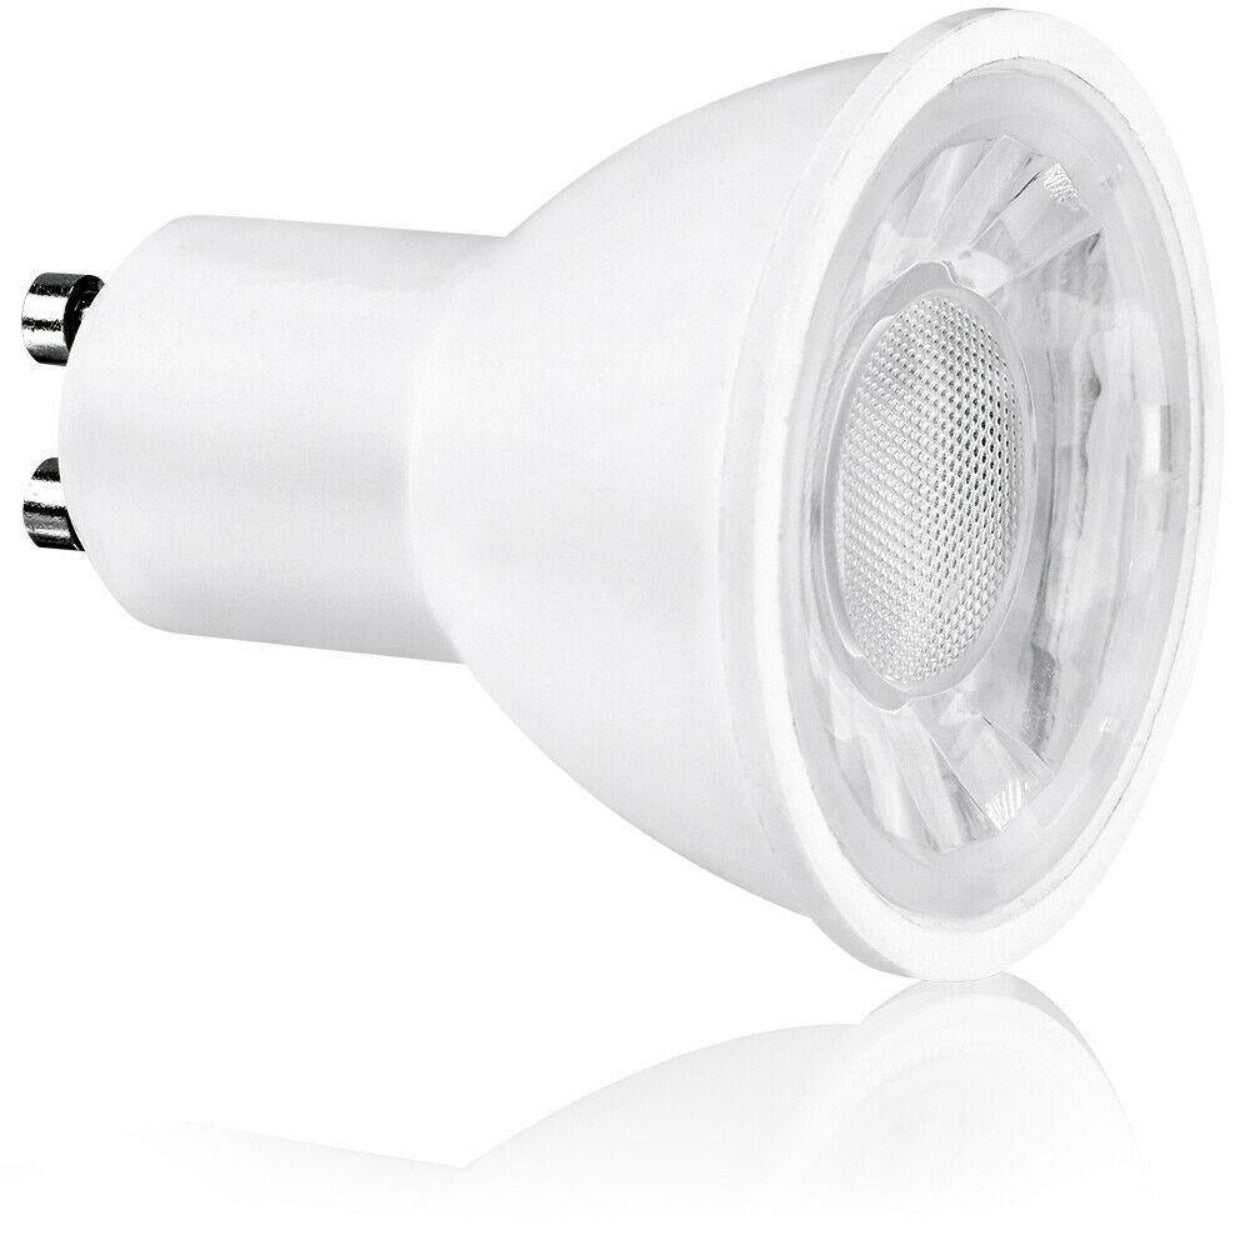 ANKUR GU10 LED MODULE LAMP - Ankur Lighting